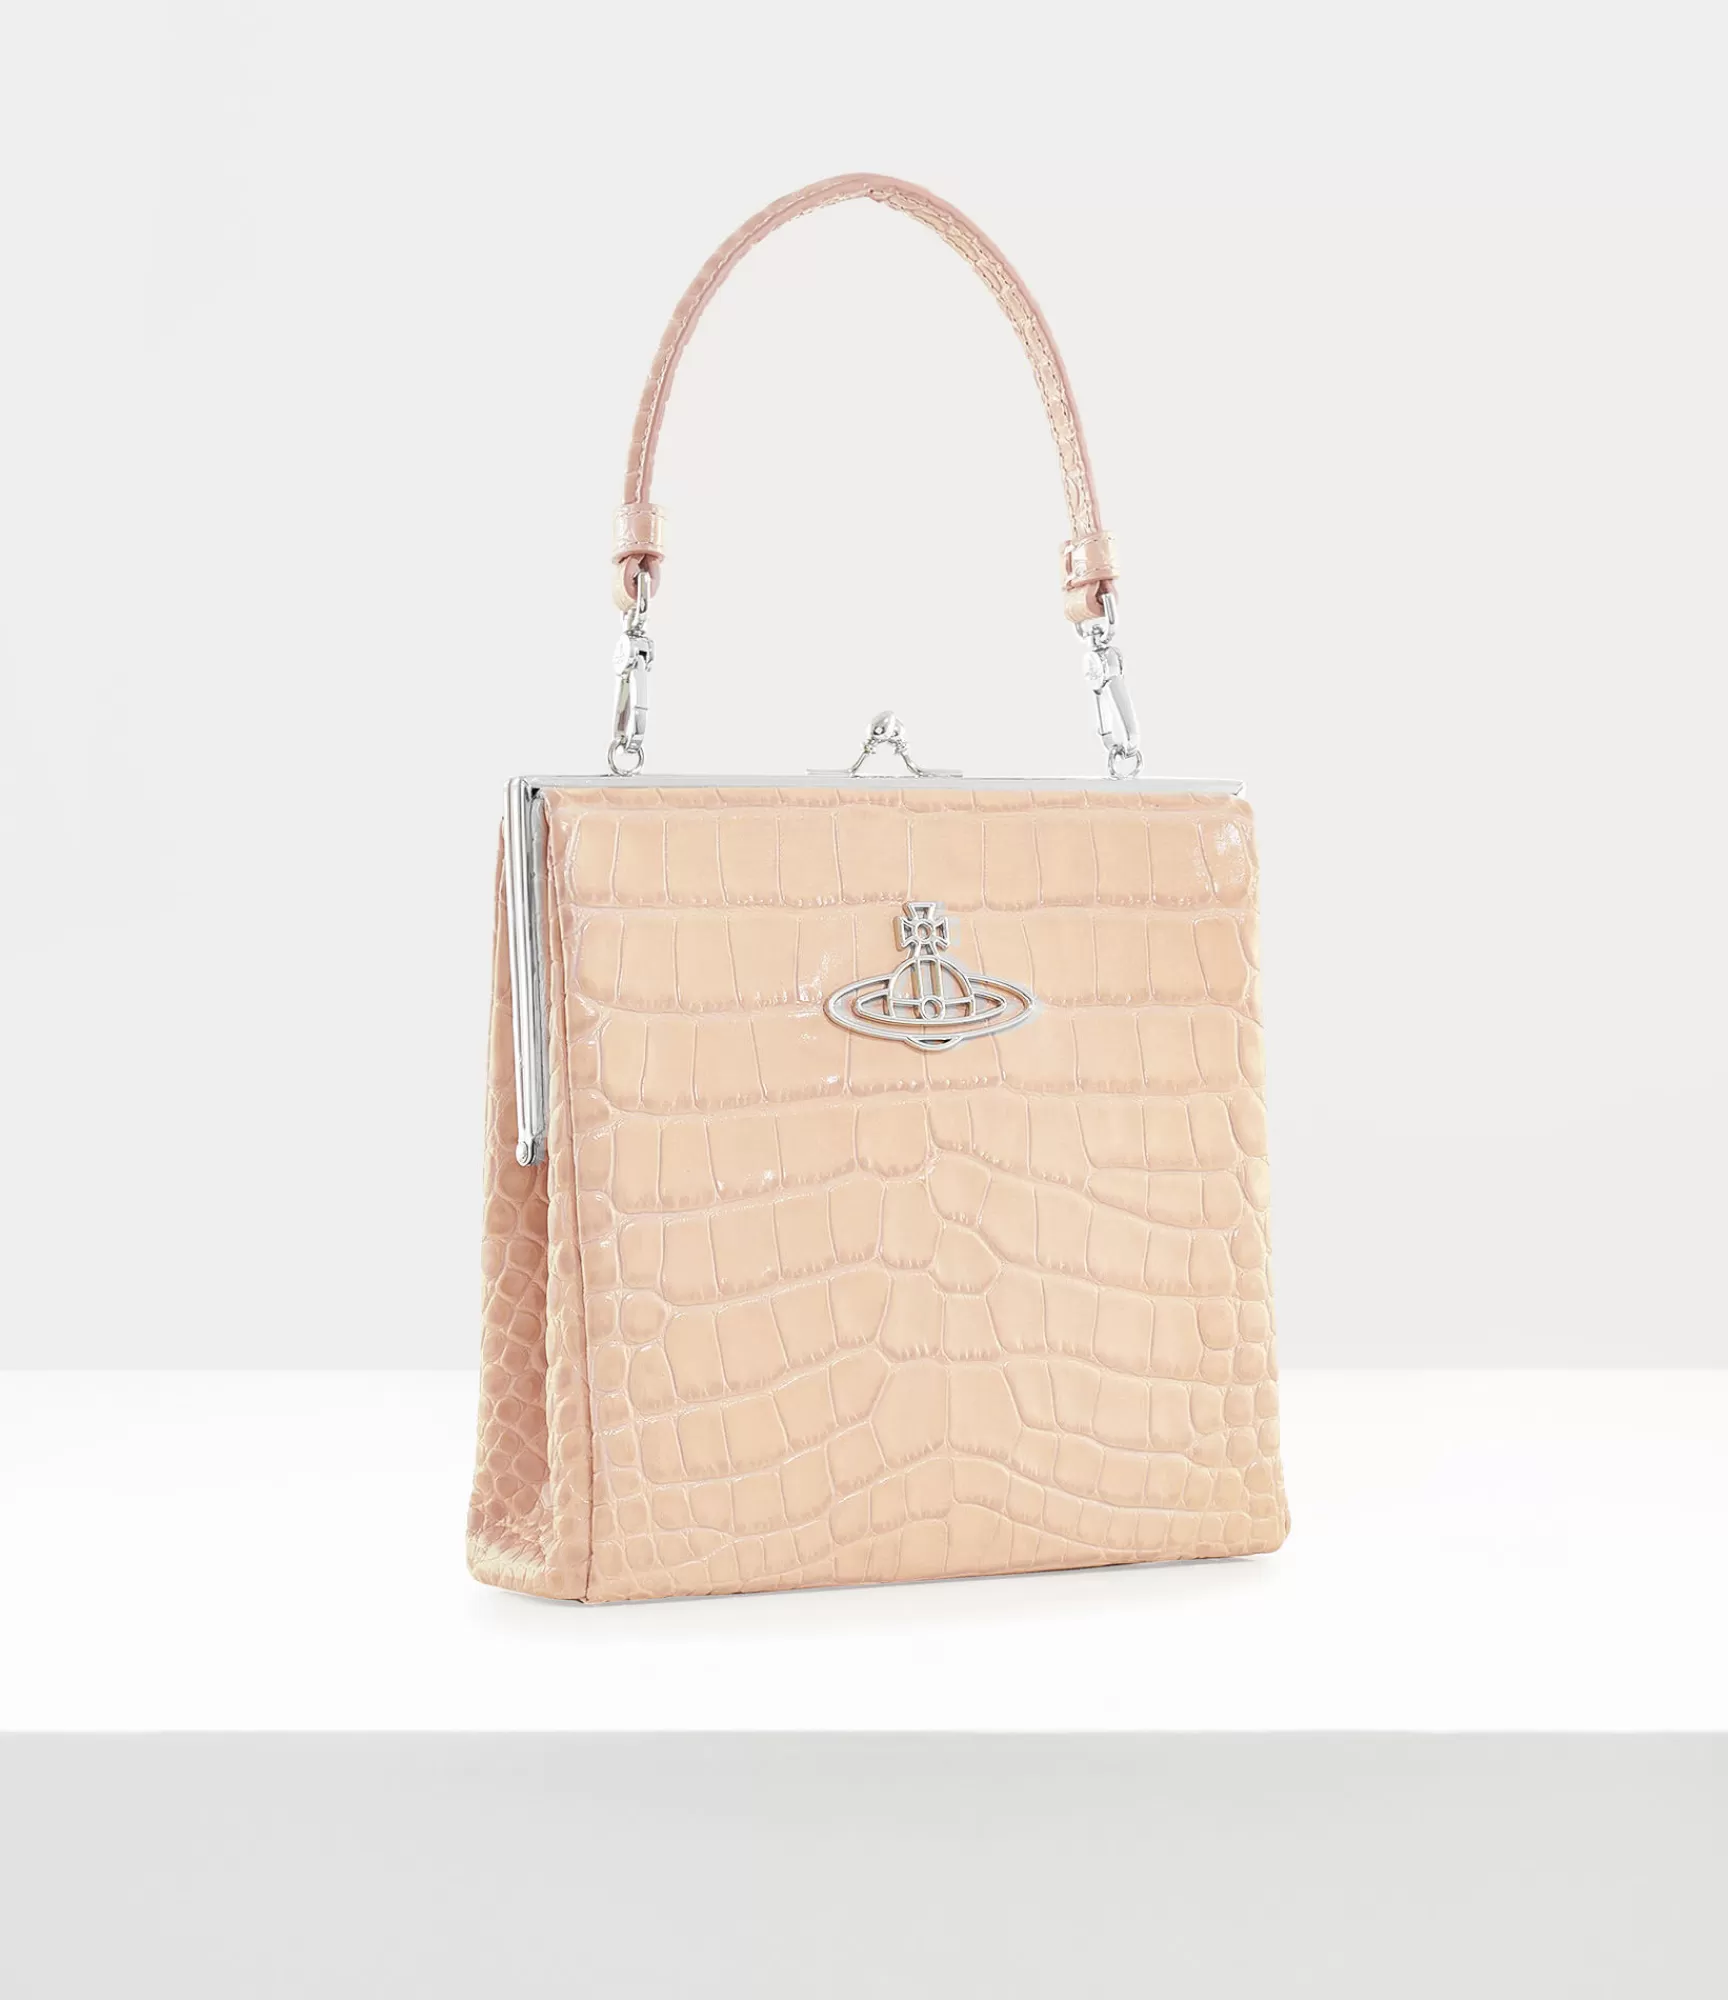 Vivienne Westwood Handbags*Square frame purse Cream